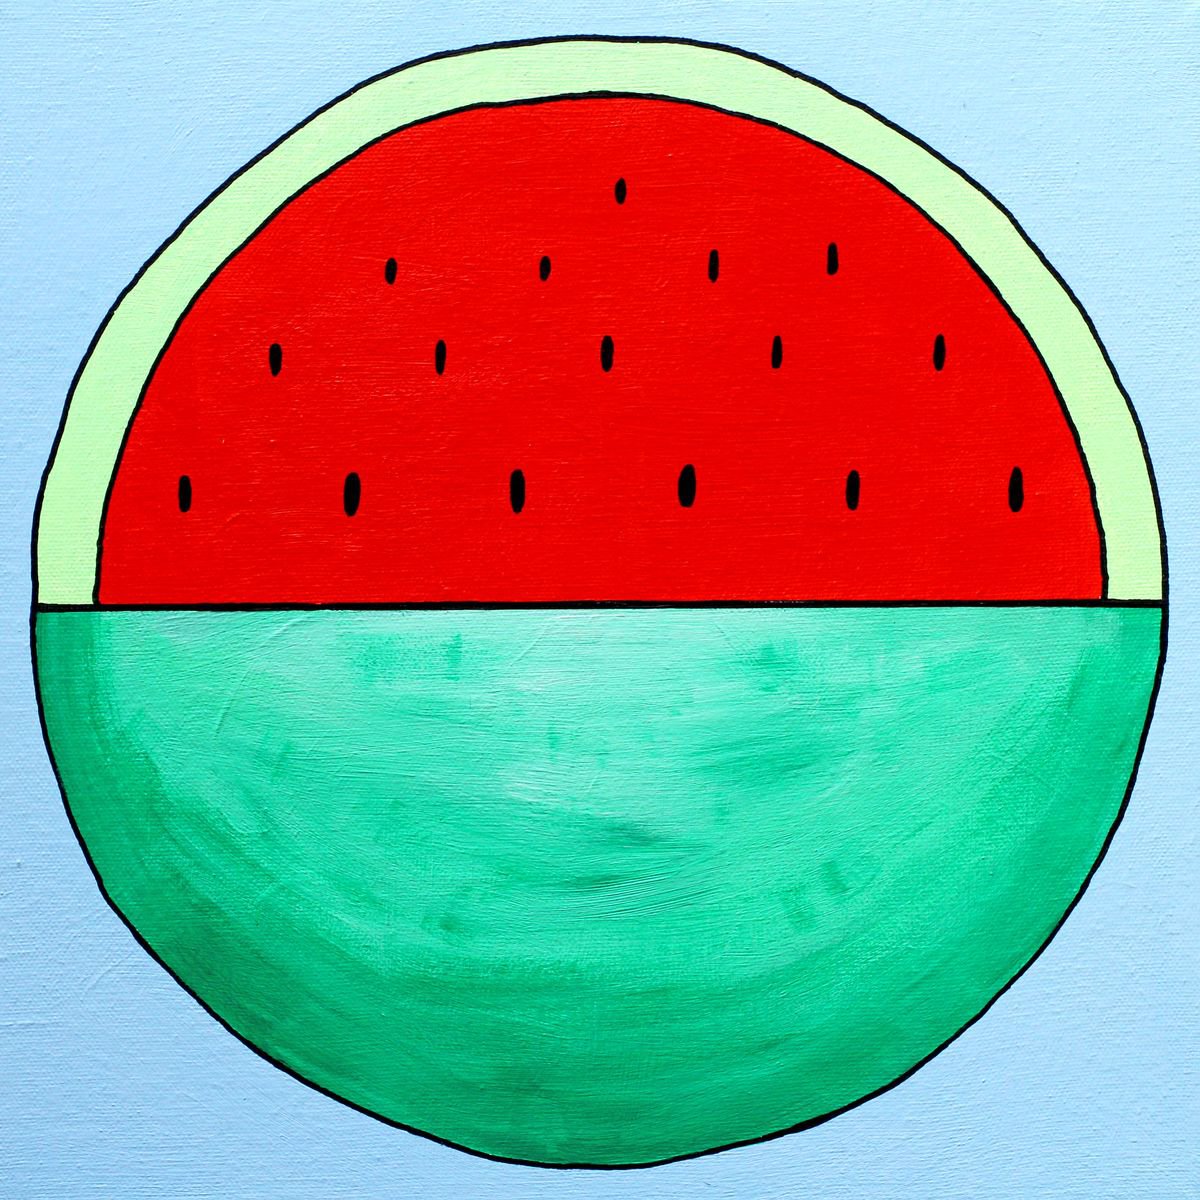 Watermelon Pop Art Acrylic Painting On Canvas by Ian Viggars